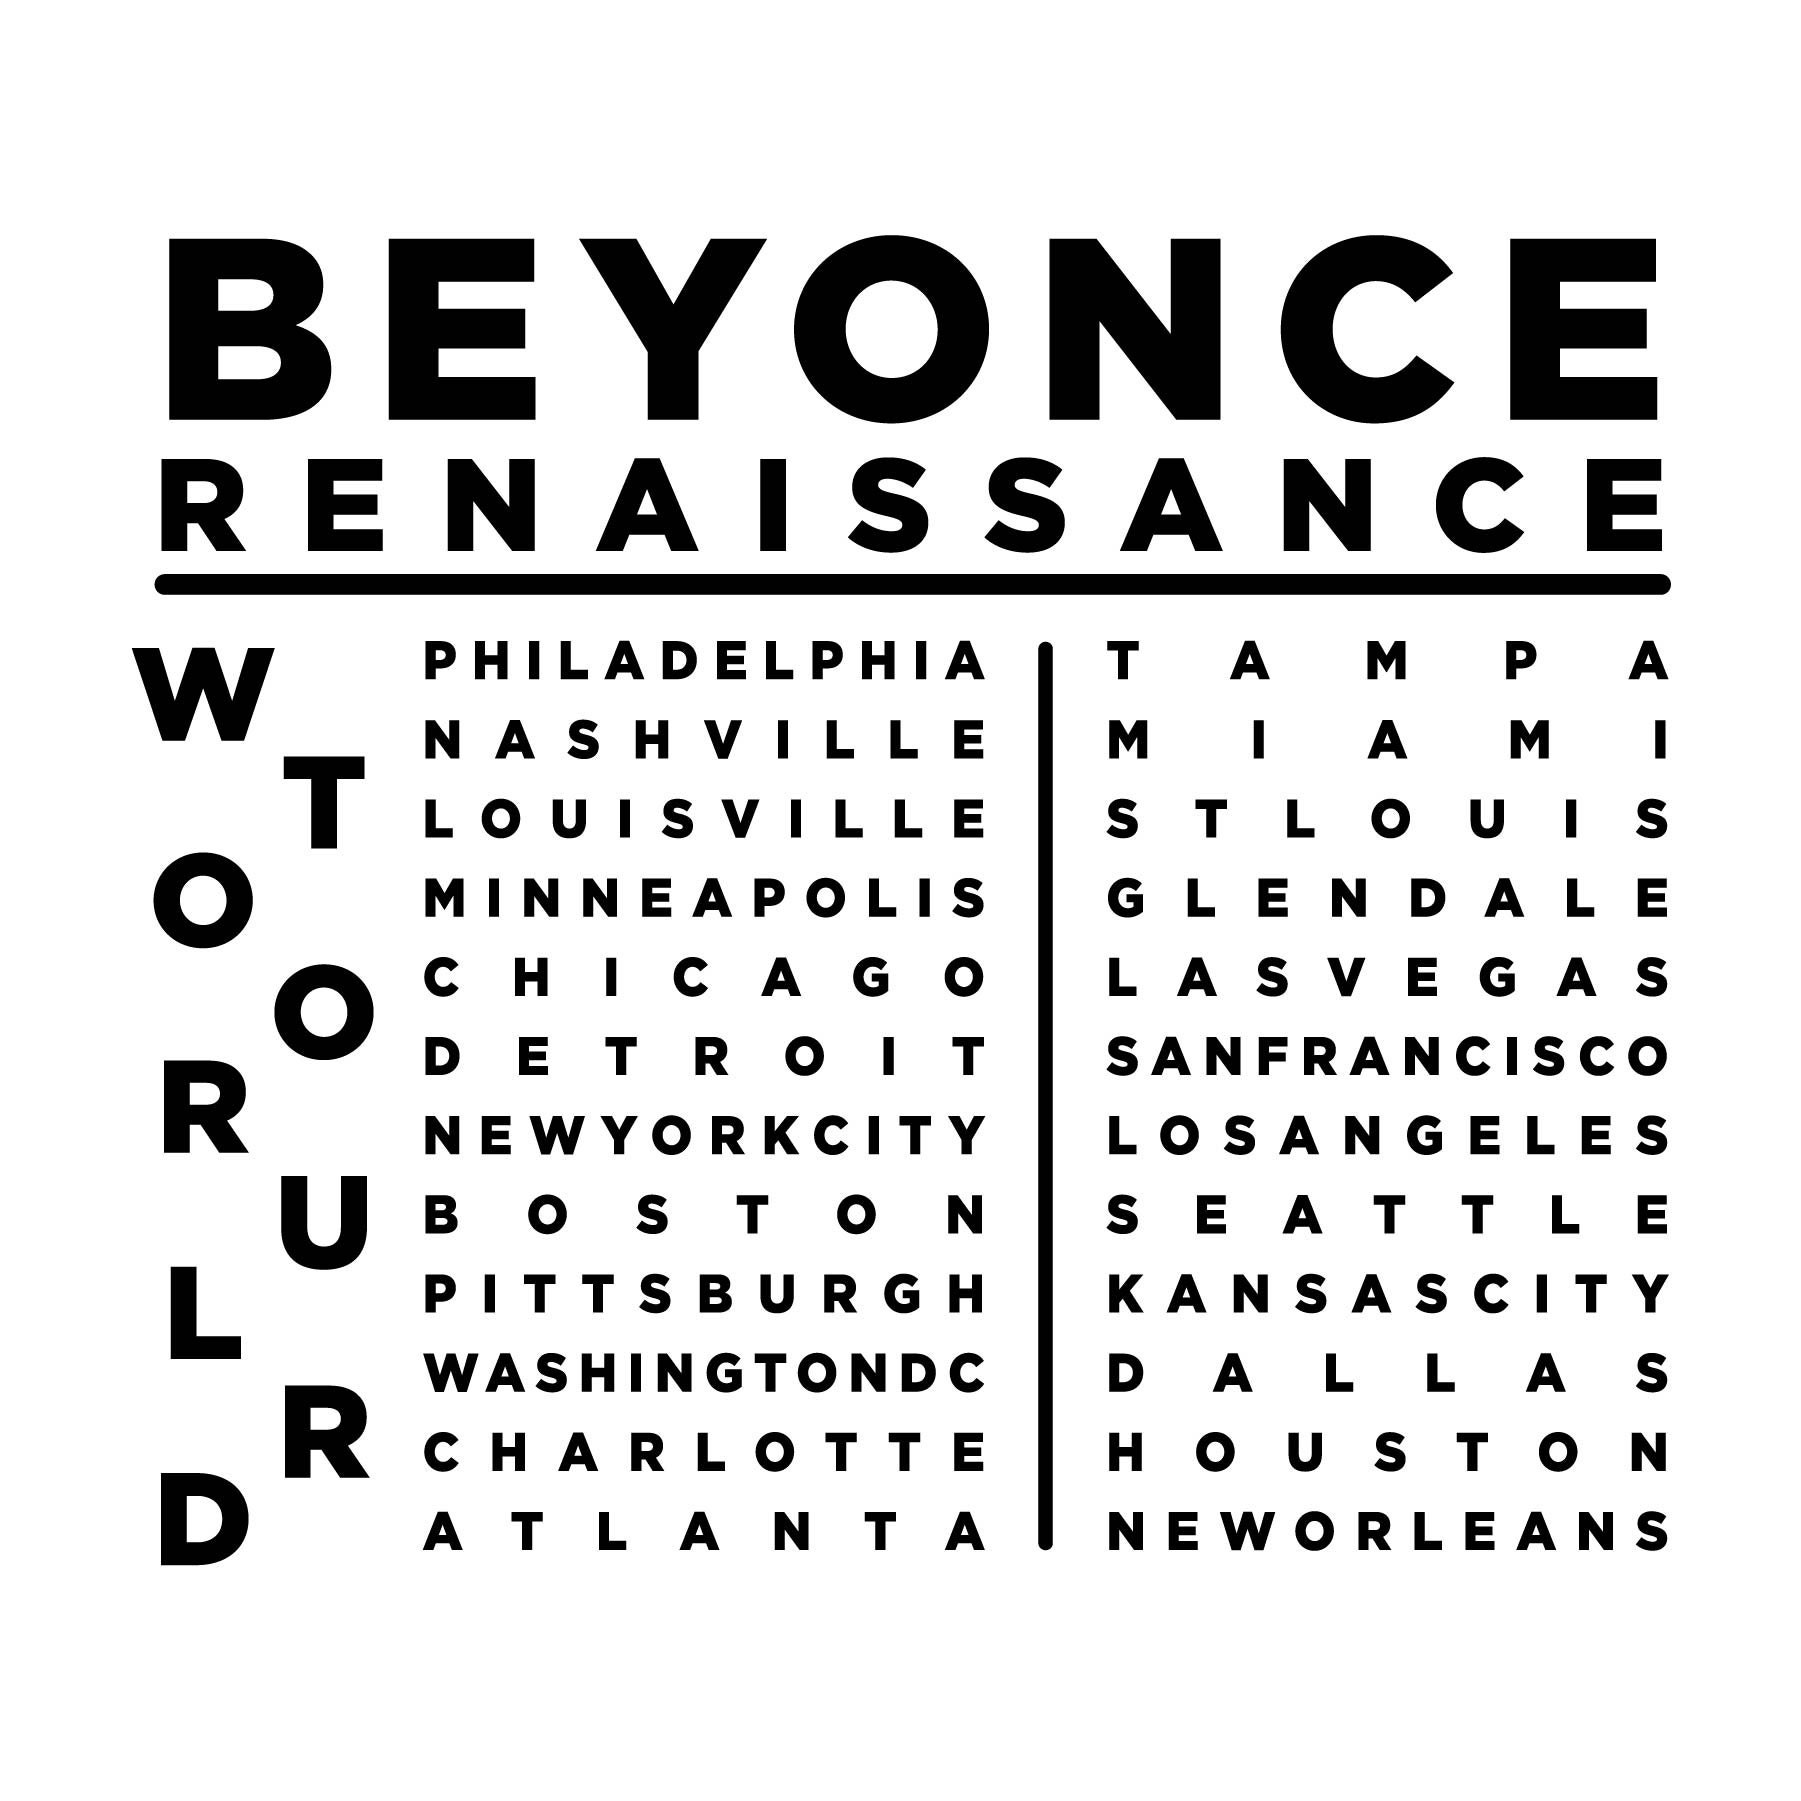 Beyonce Renaissance World Tour SVG - Etsy